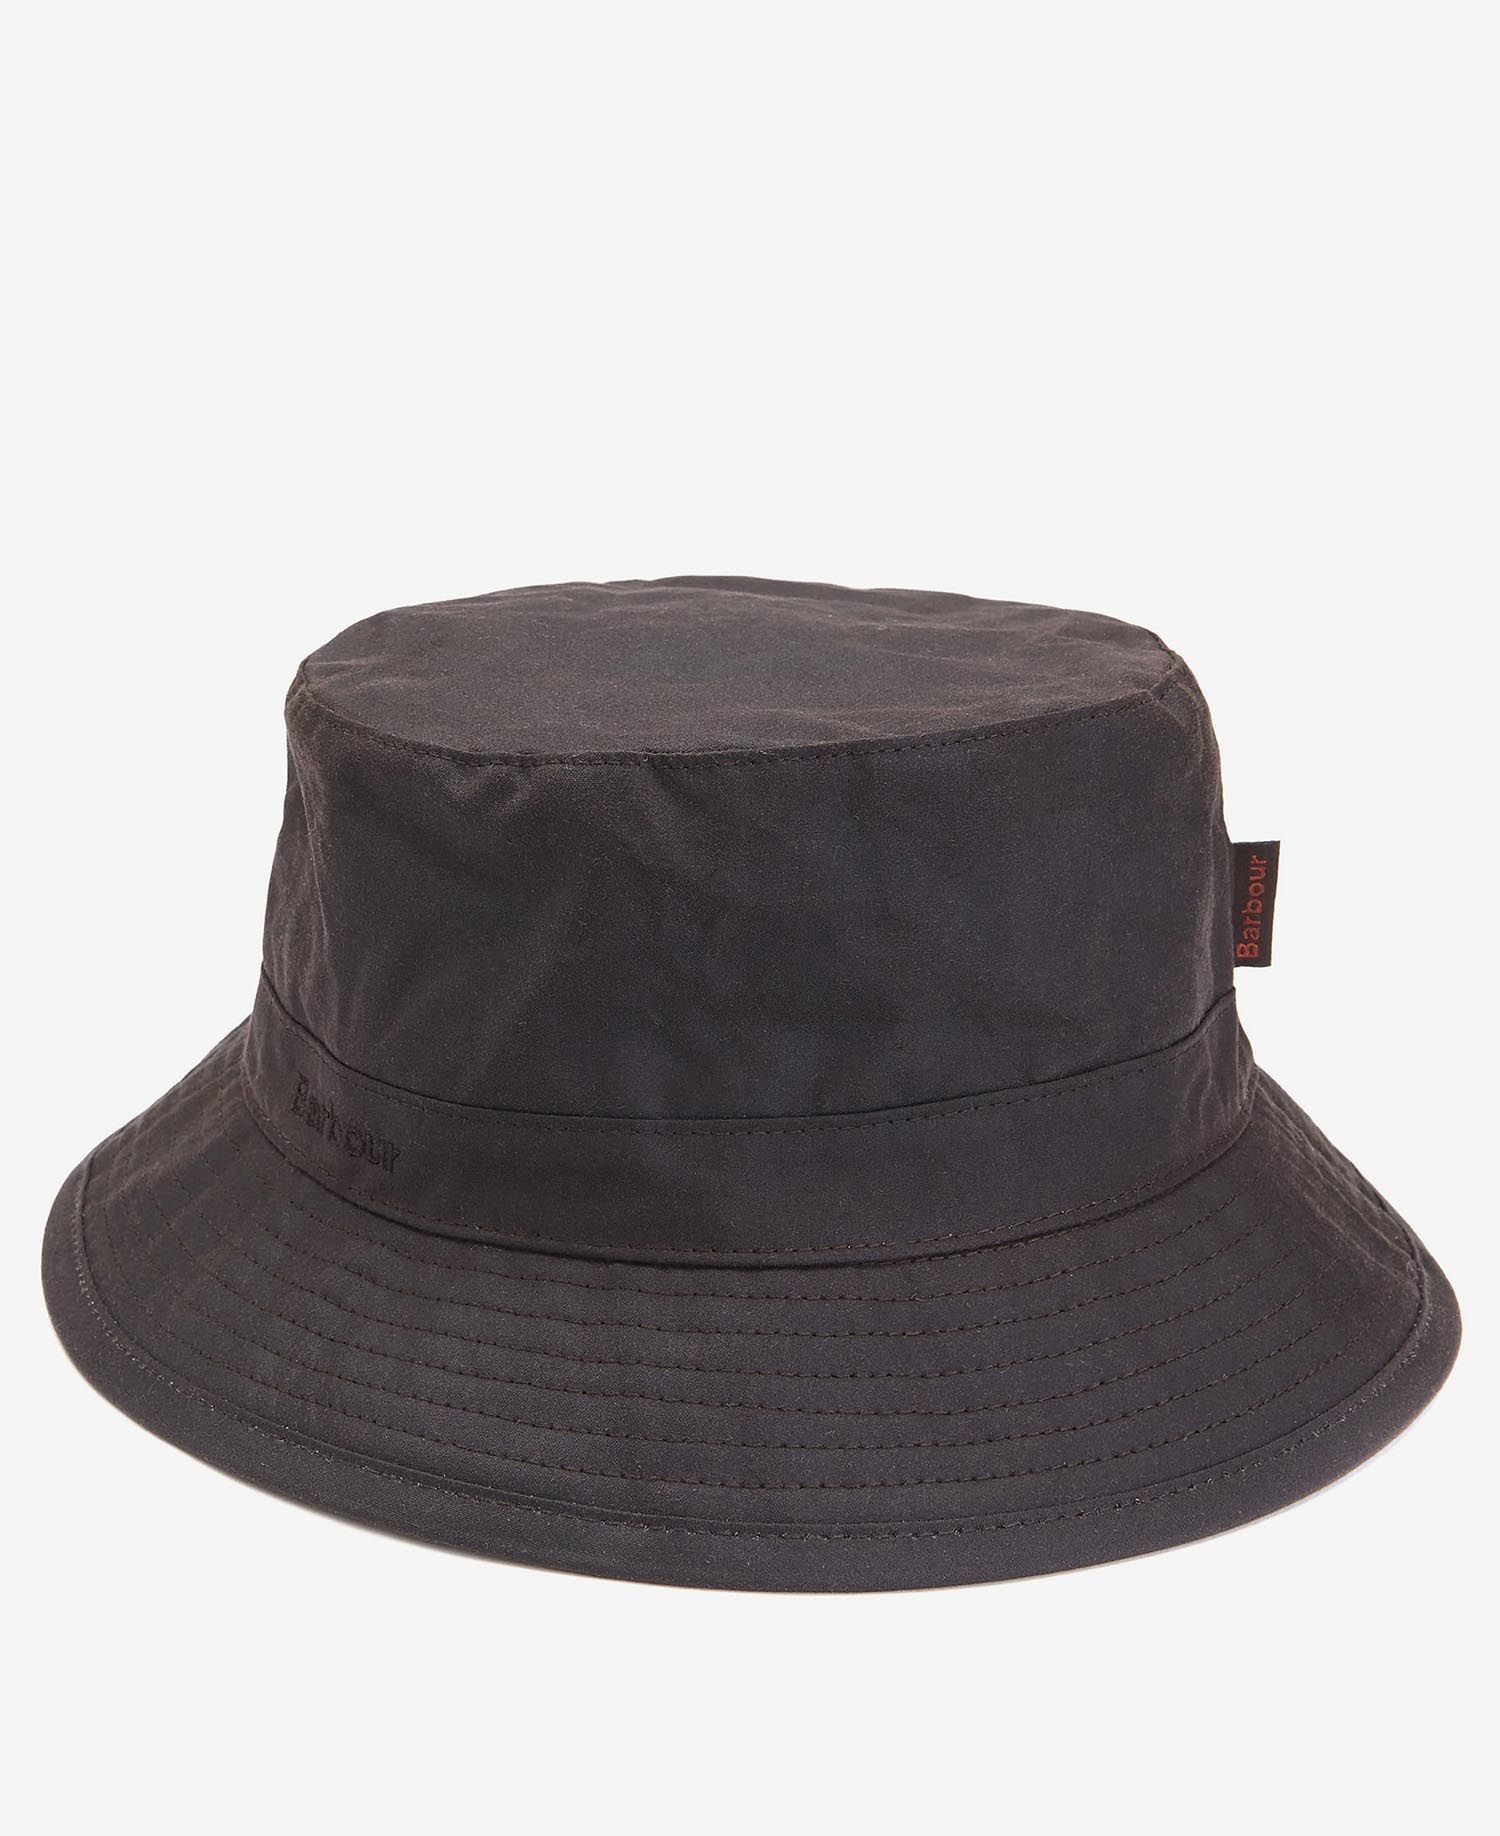 Barbour Wax Sports Hat | The Farmers Friend